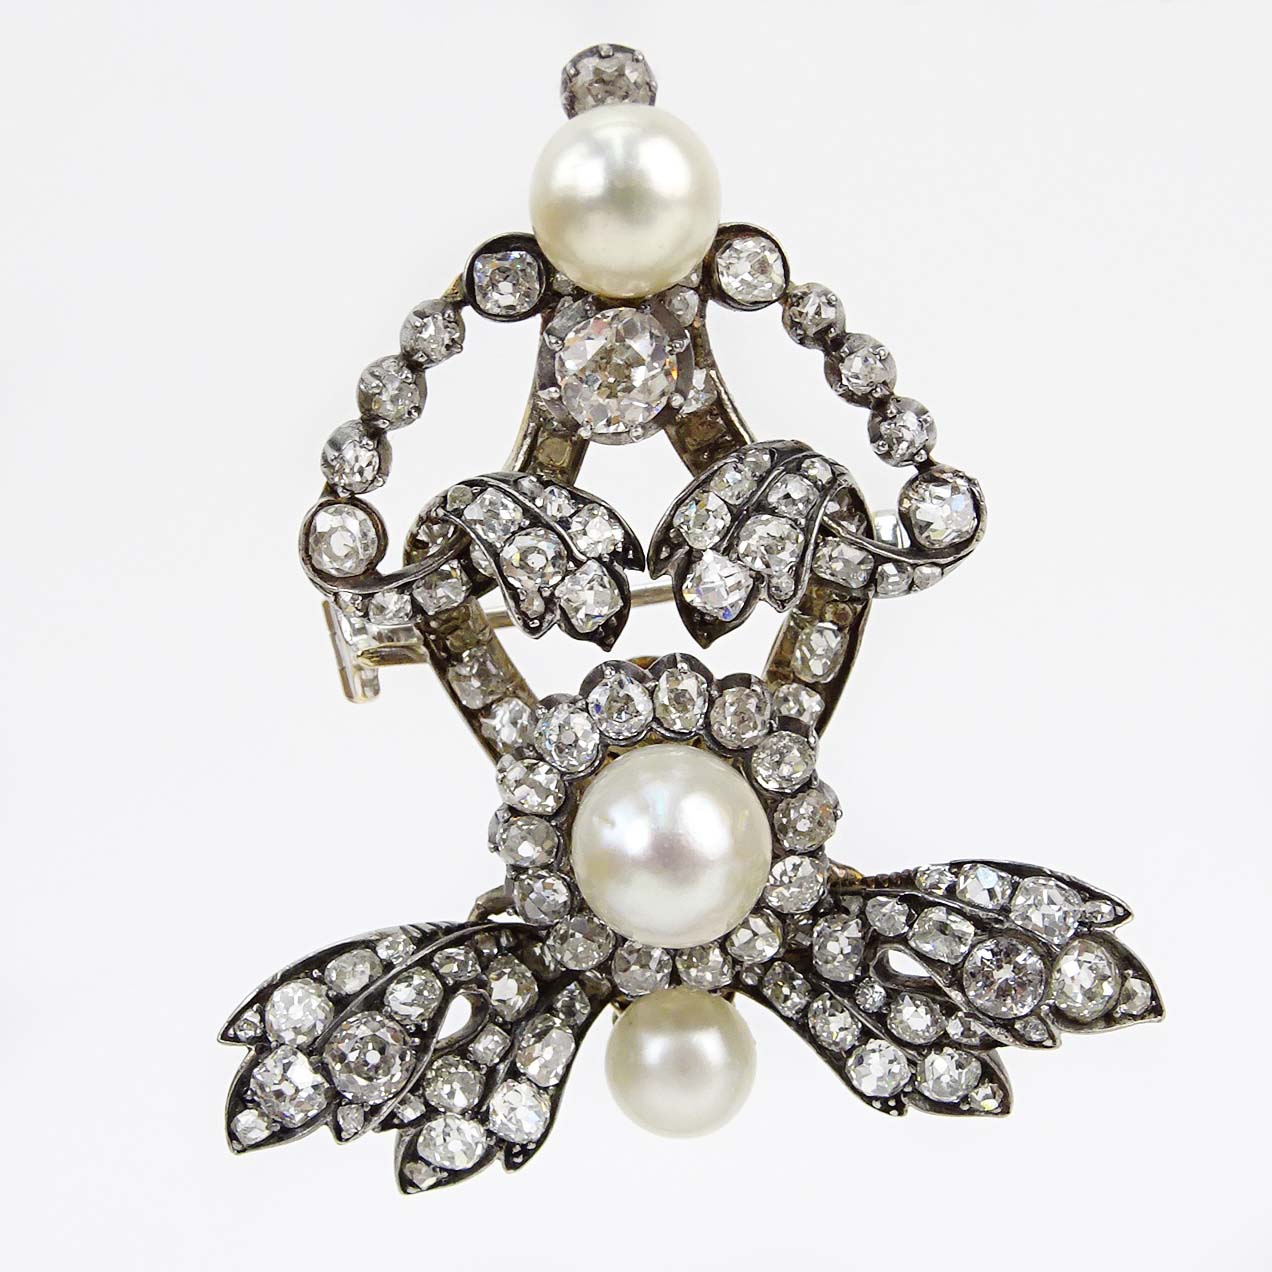 Victorian Old European Cut Diamond, Pearl and Silver Pendant/Brooch en tremblant. 